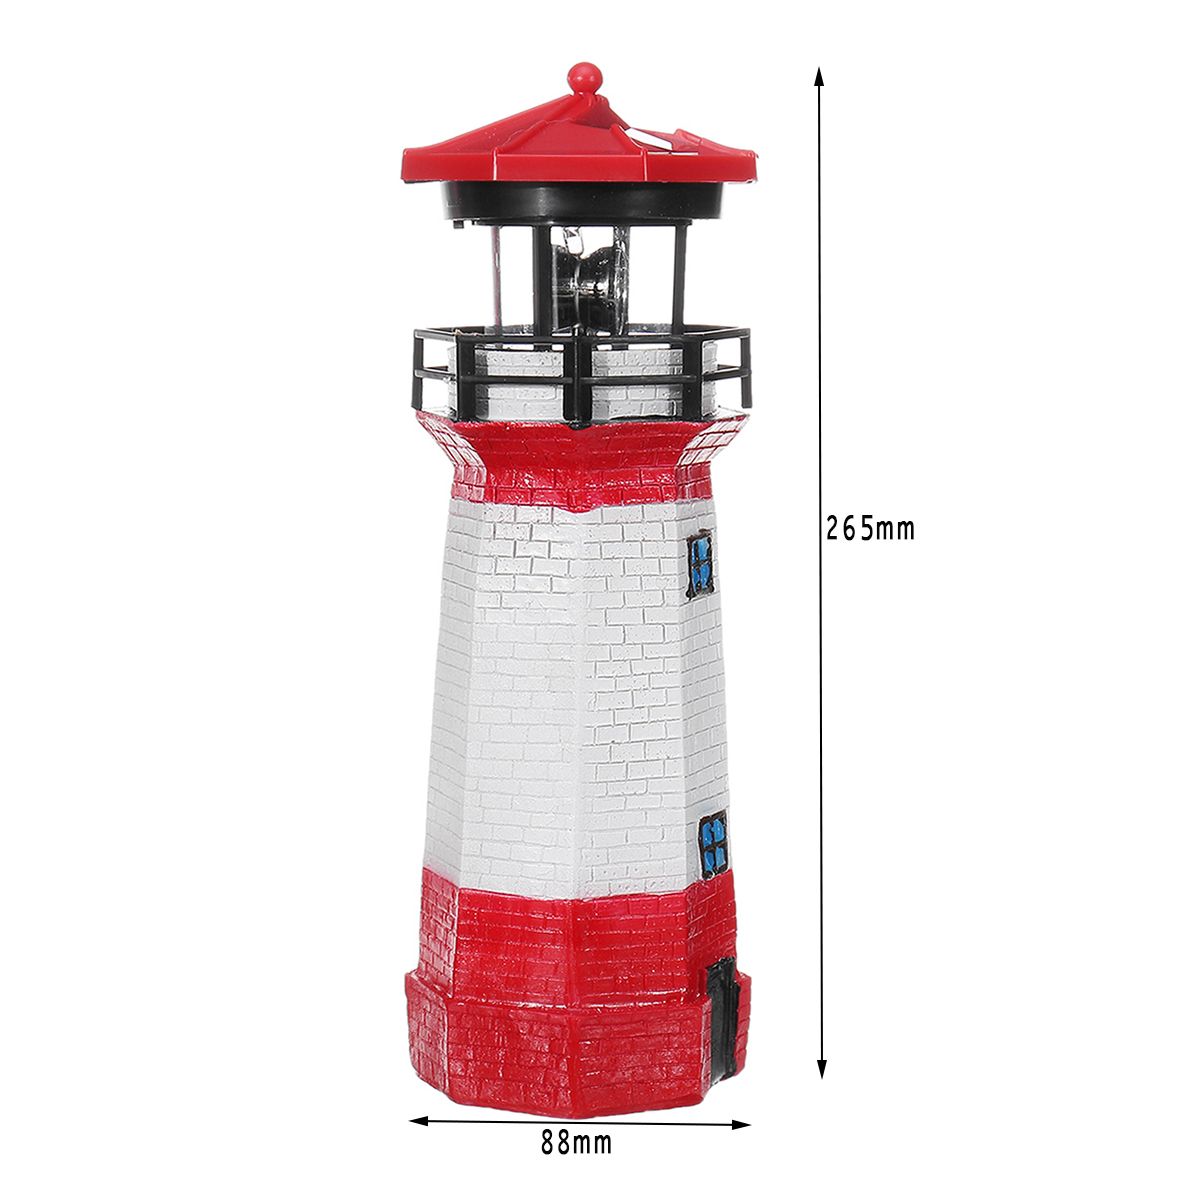 Solar-Powered-Garden-Lighthouse-Rotating-Beam-LED-Yard-Light-Ornament-Lamp-Home-Decor-1528138